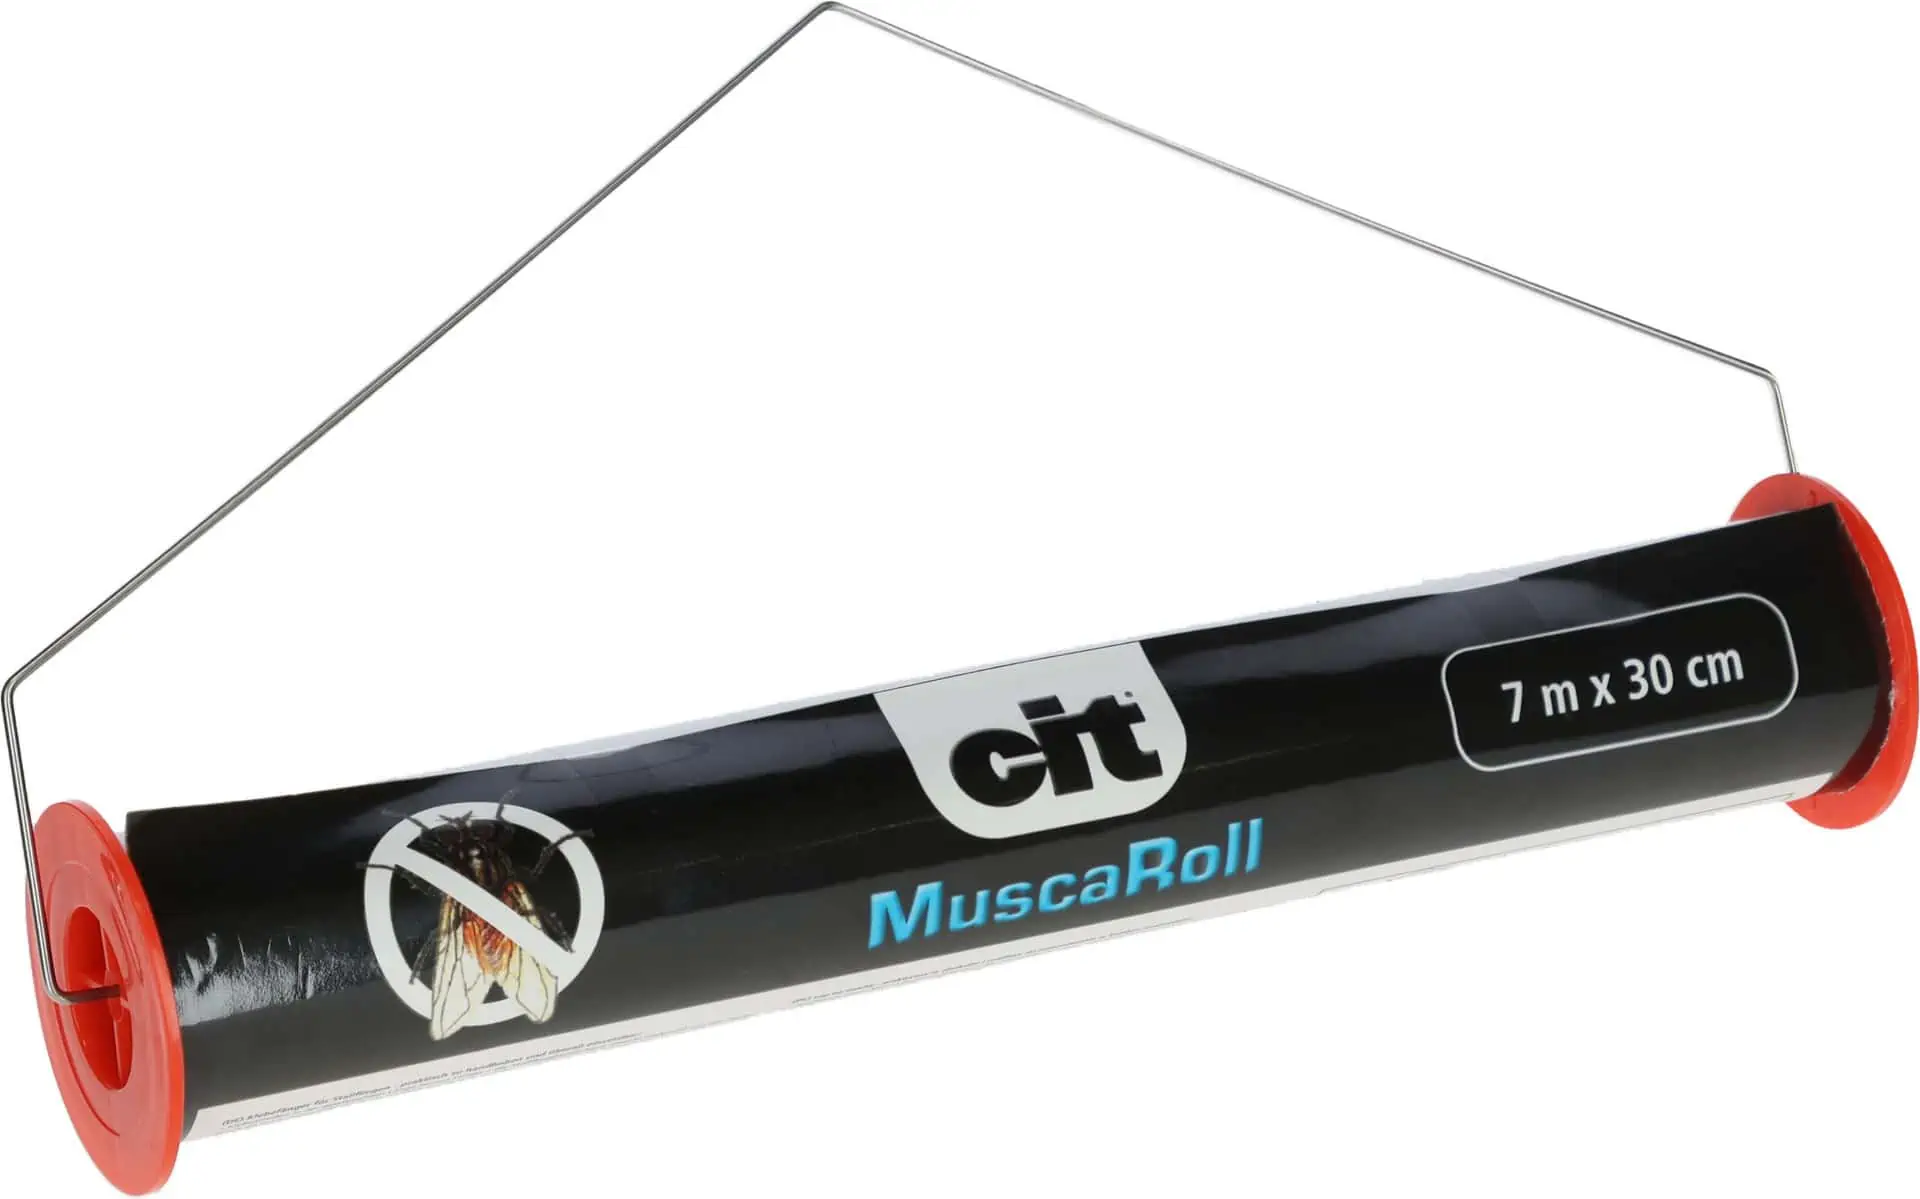 Cit Fly Roll MuscaRoll, Metal Holder, 7 m x 30 cm